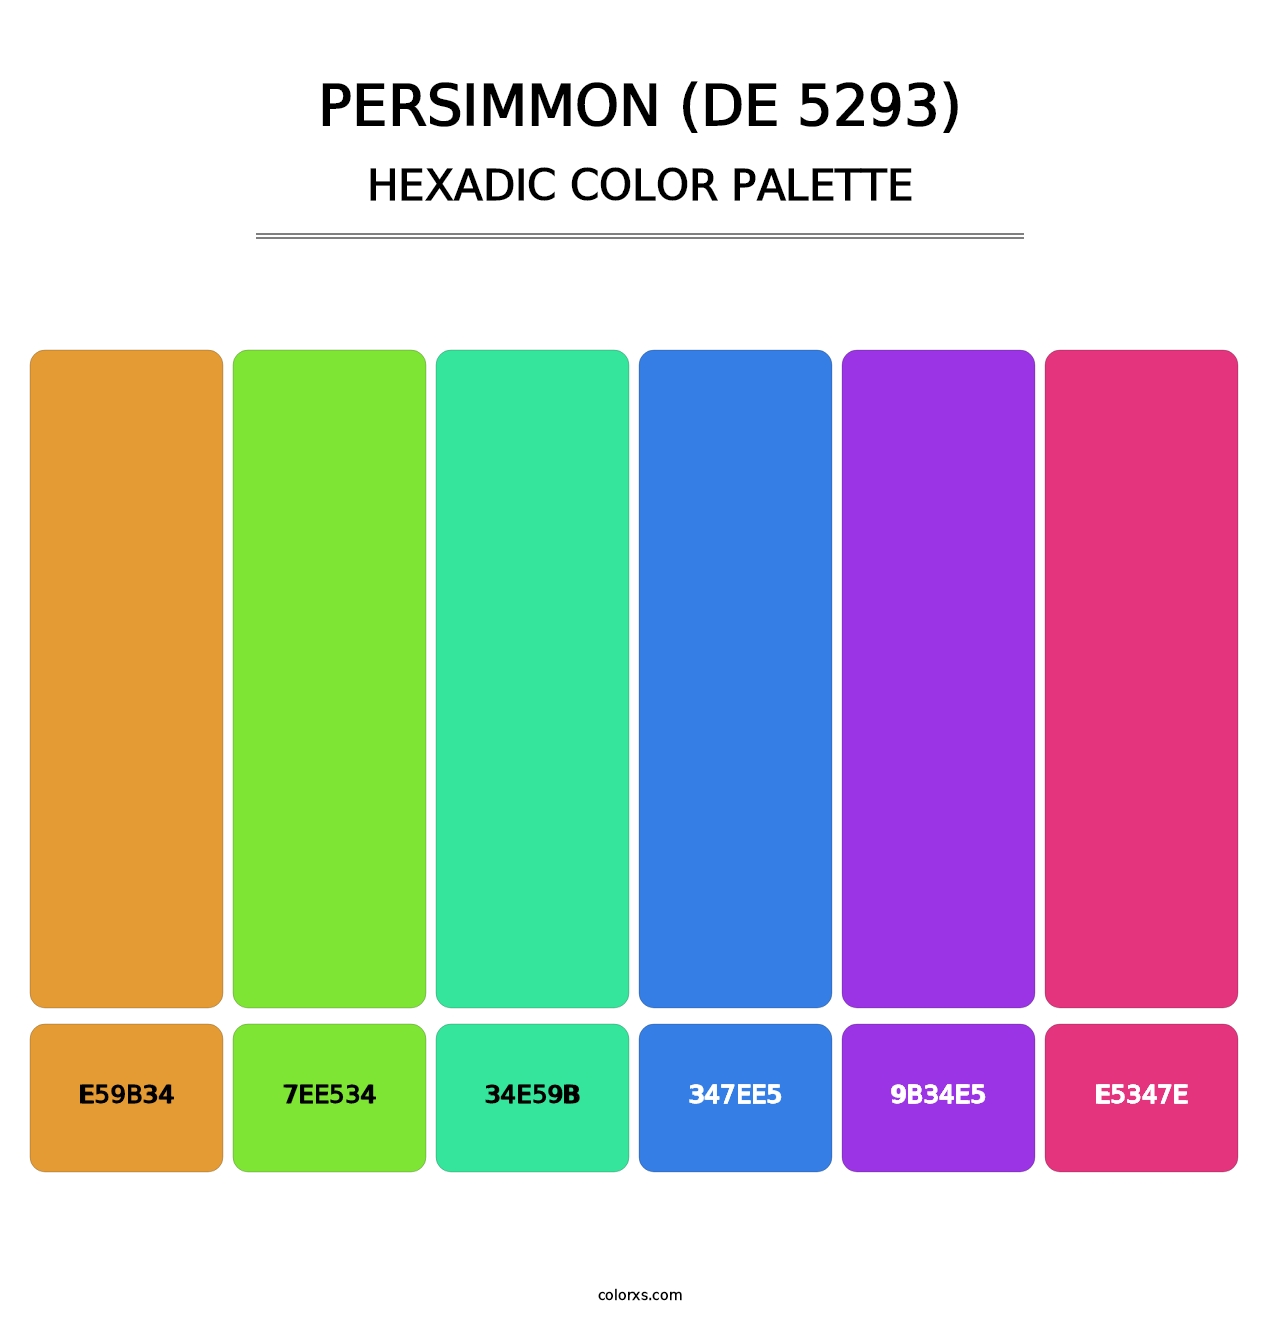 Persimmon (DE 5293) - Hexadic Color Palette